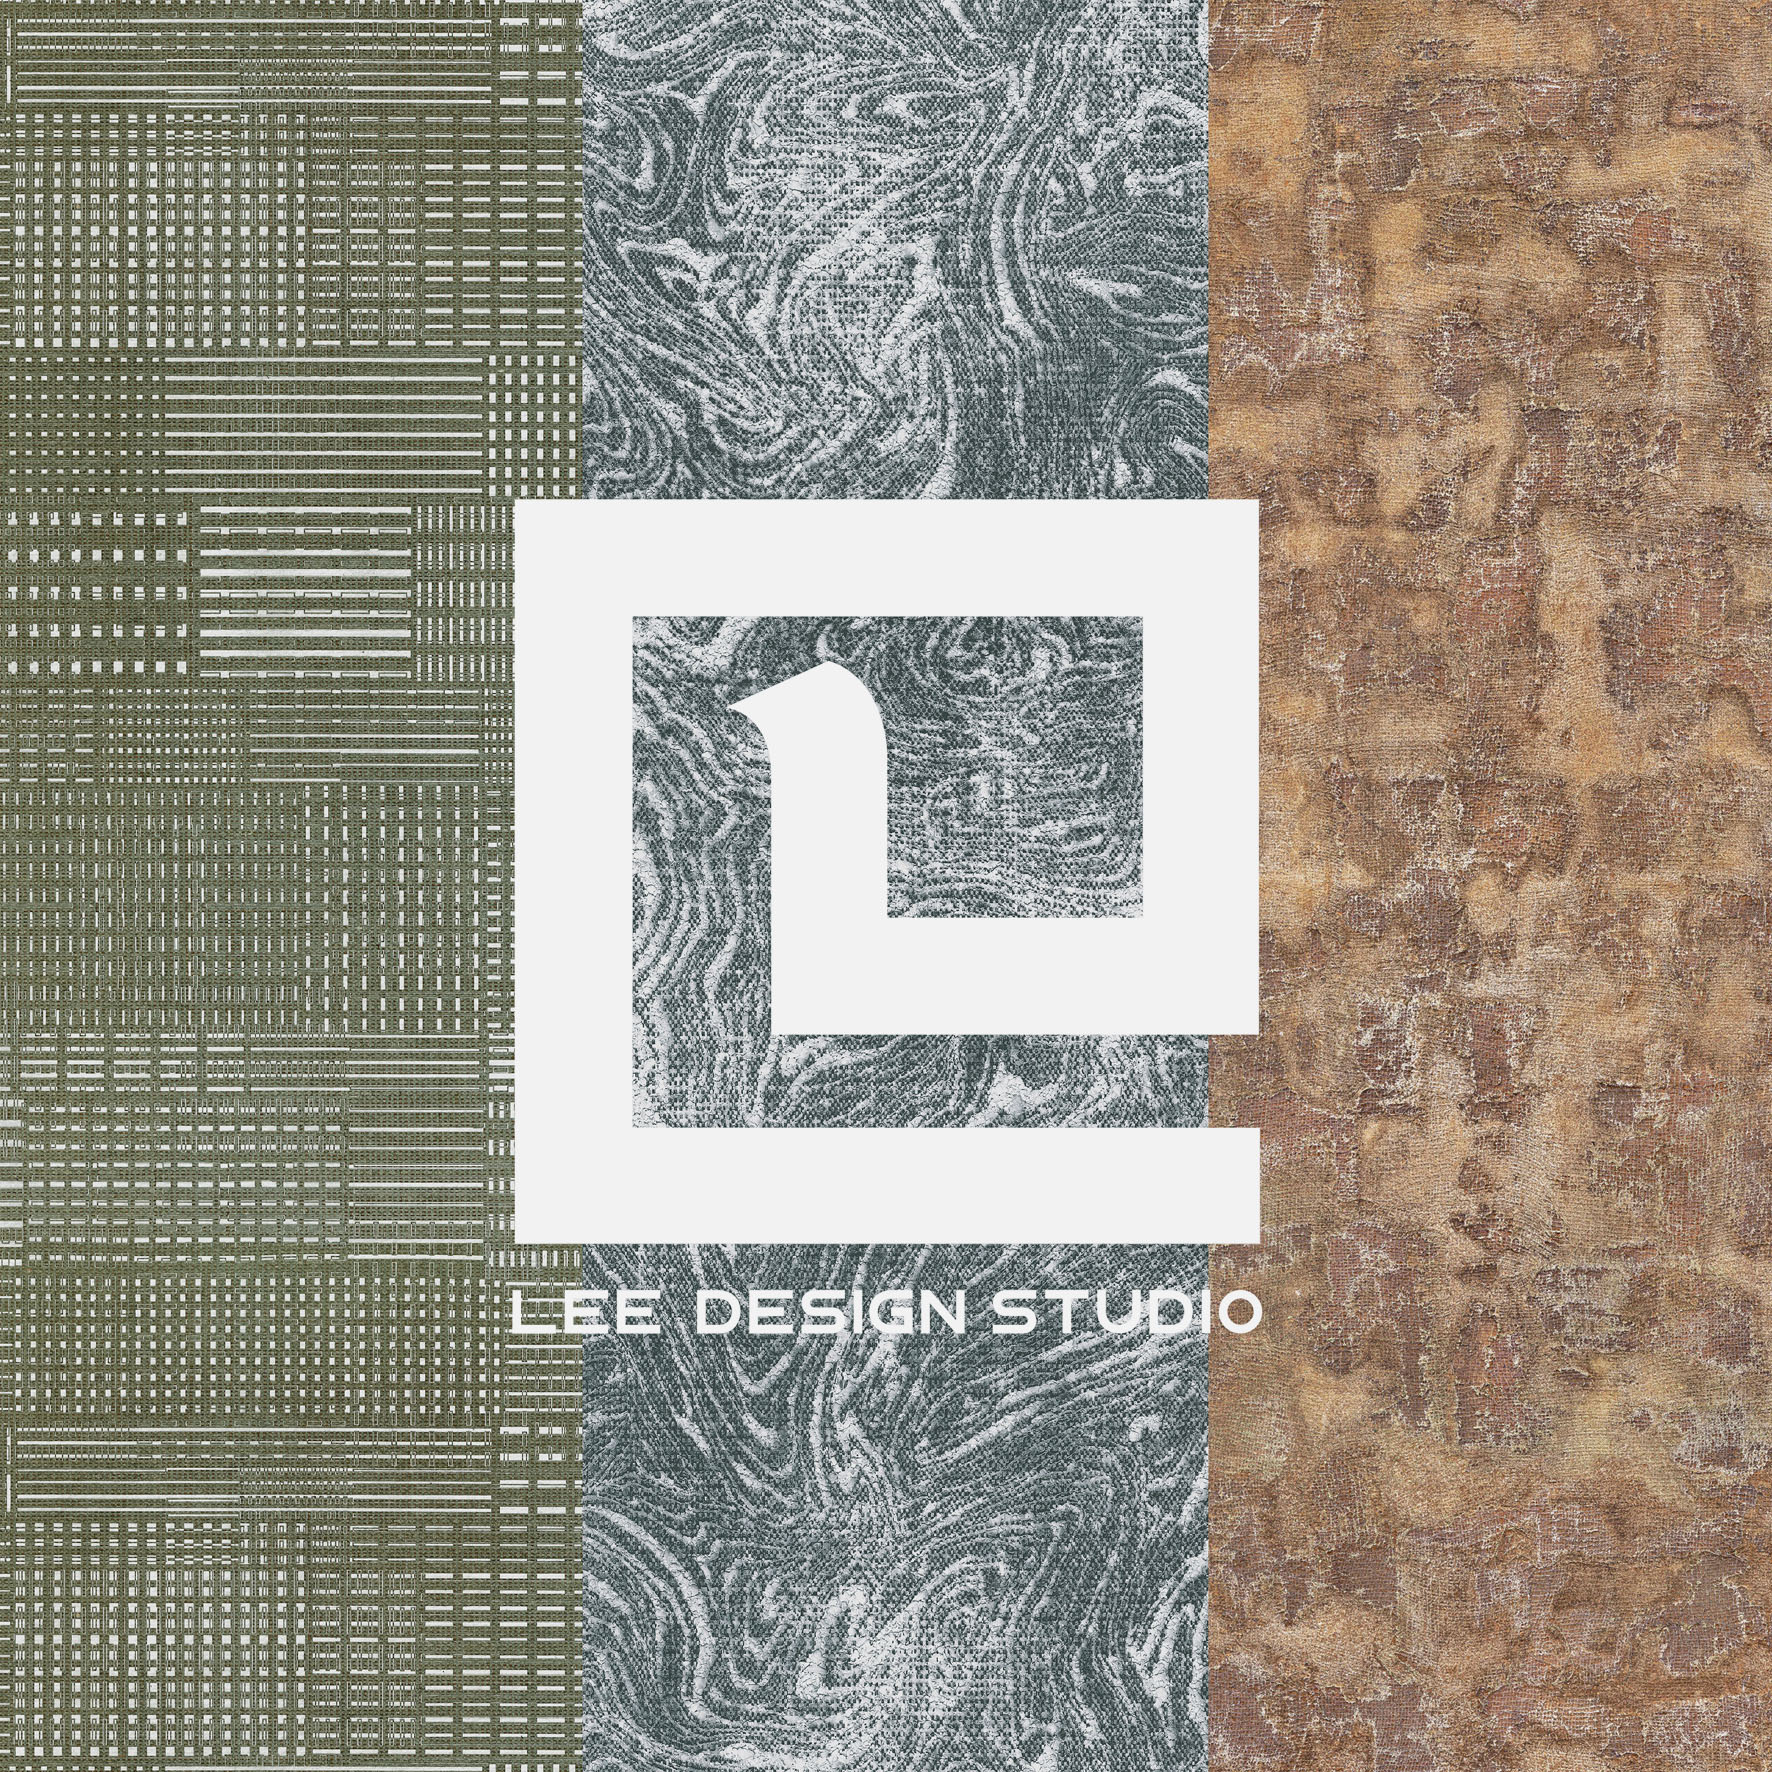 Lee Design Studio supports Evolution all the way. – EVOLUTIONFAIR